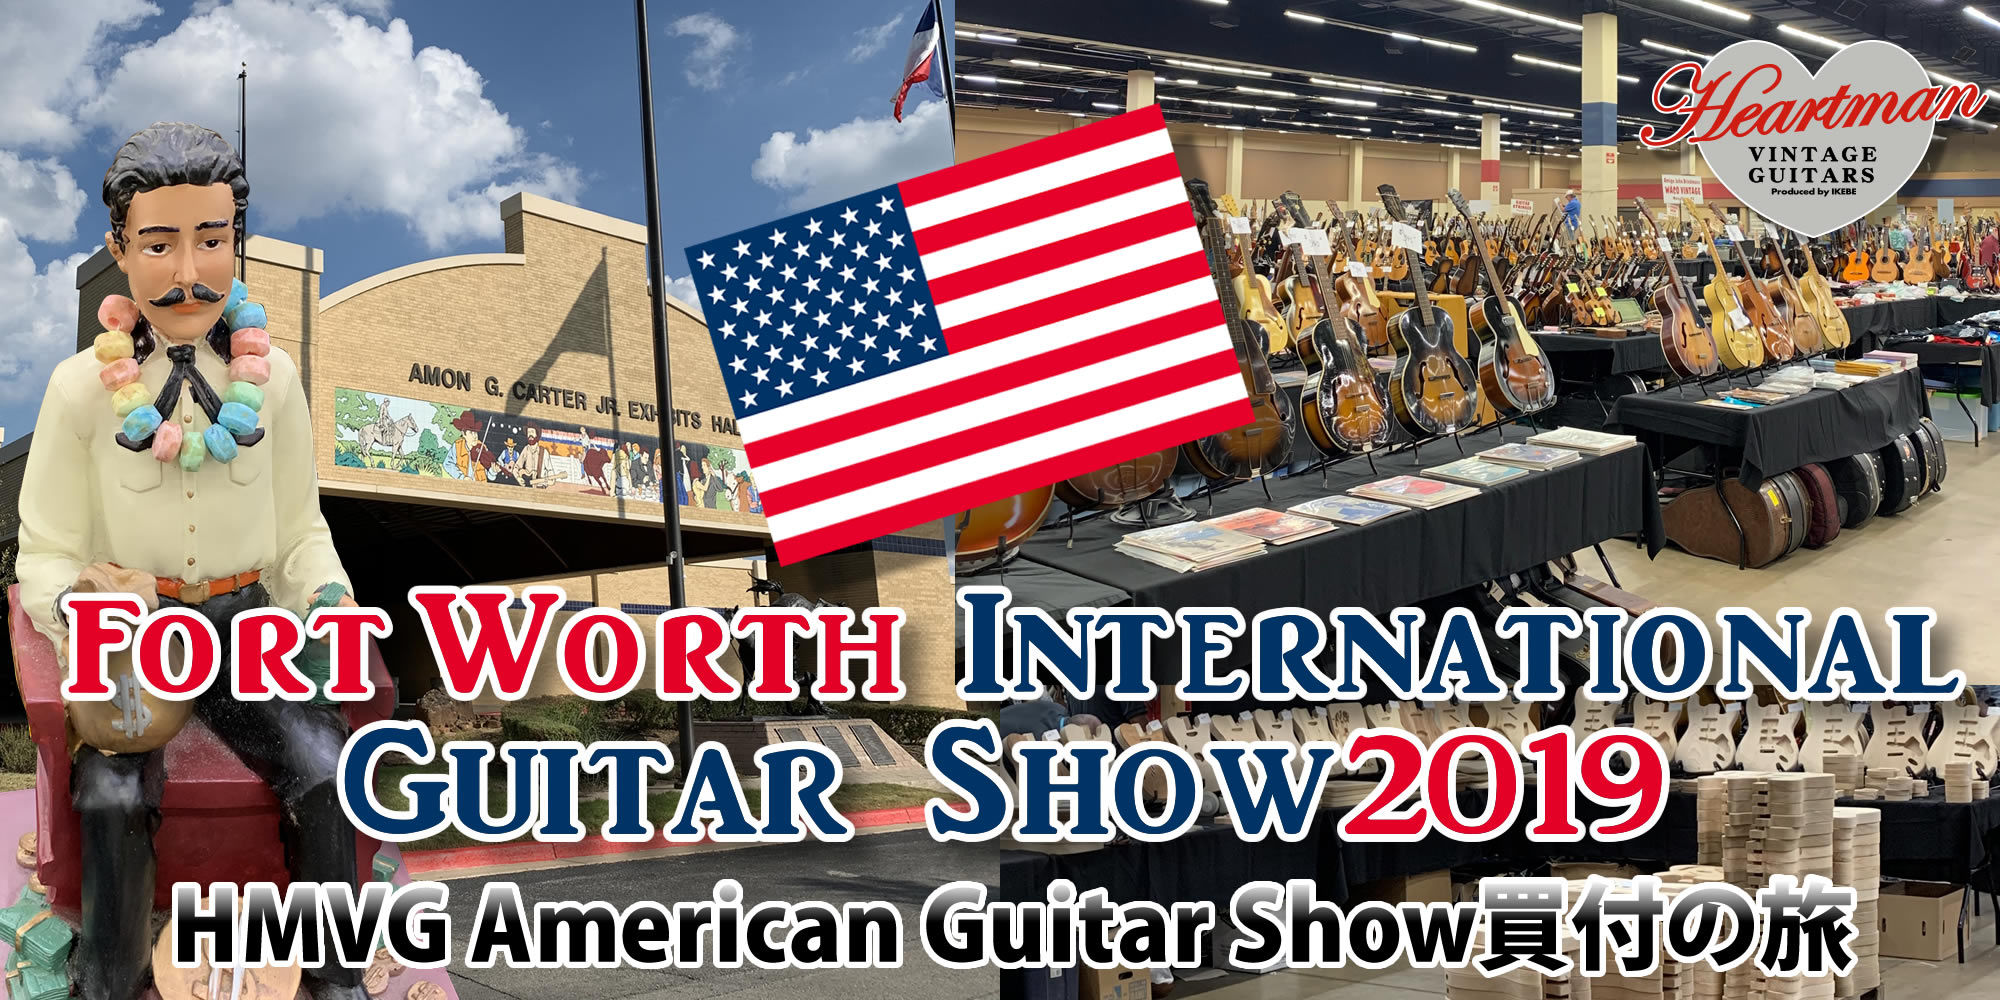 【Heartman Vintage Guitars Fort Worth International Guitar Show 2019】